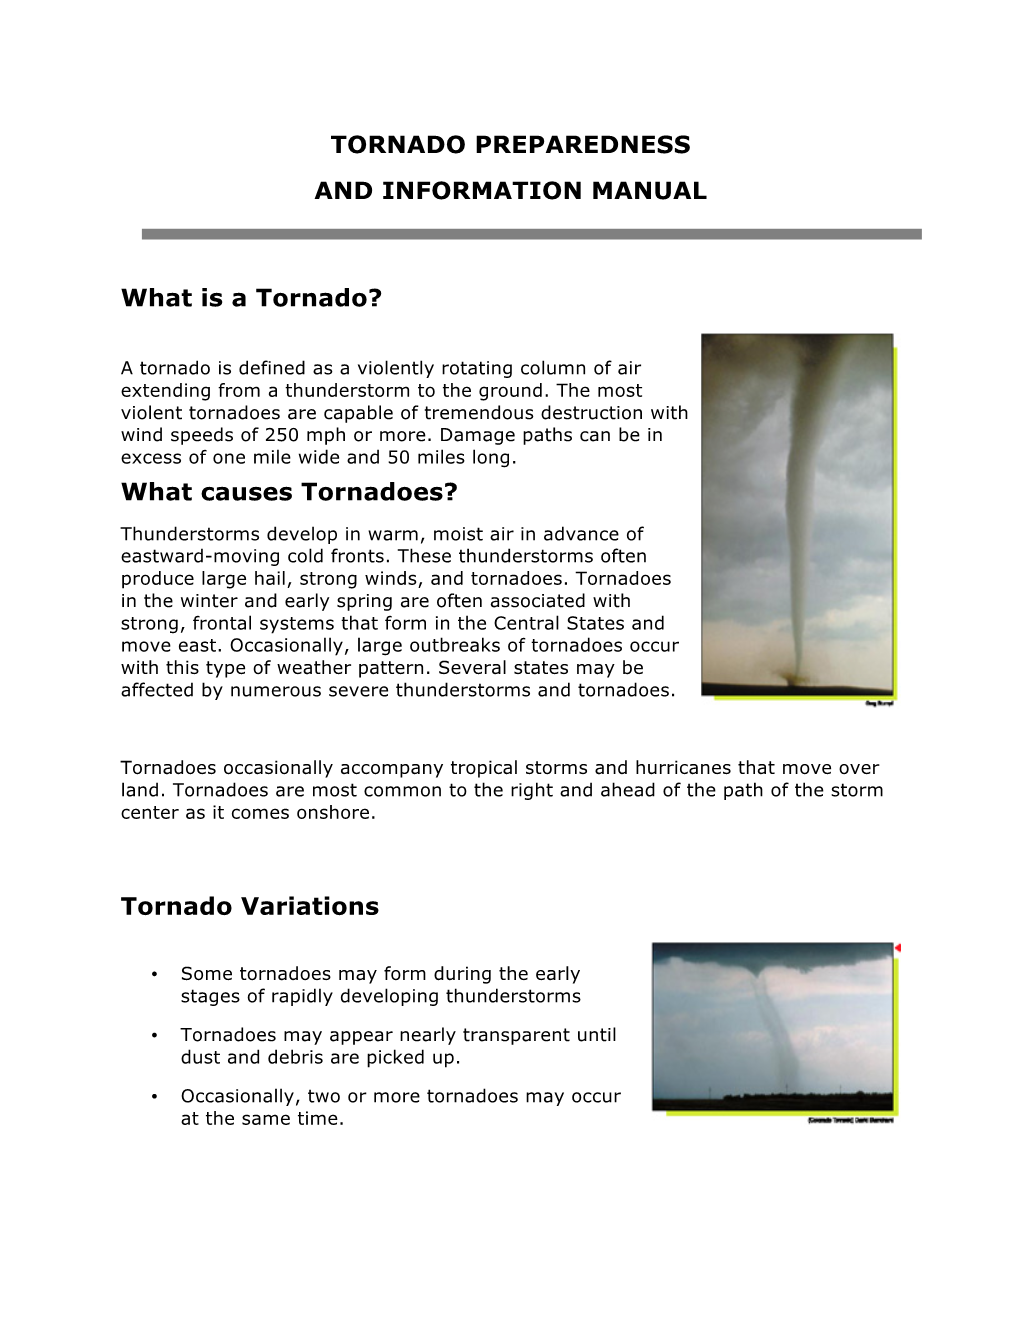 Tornado Preparedness and Information Manual